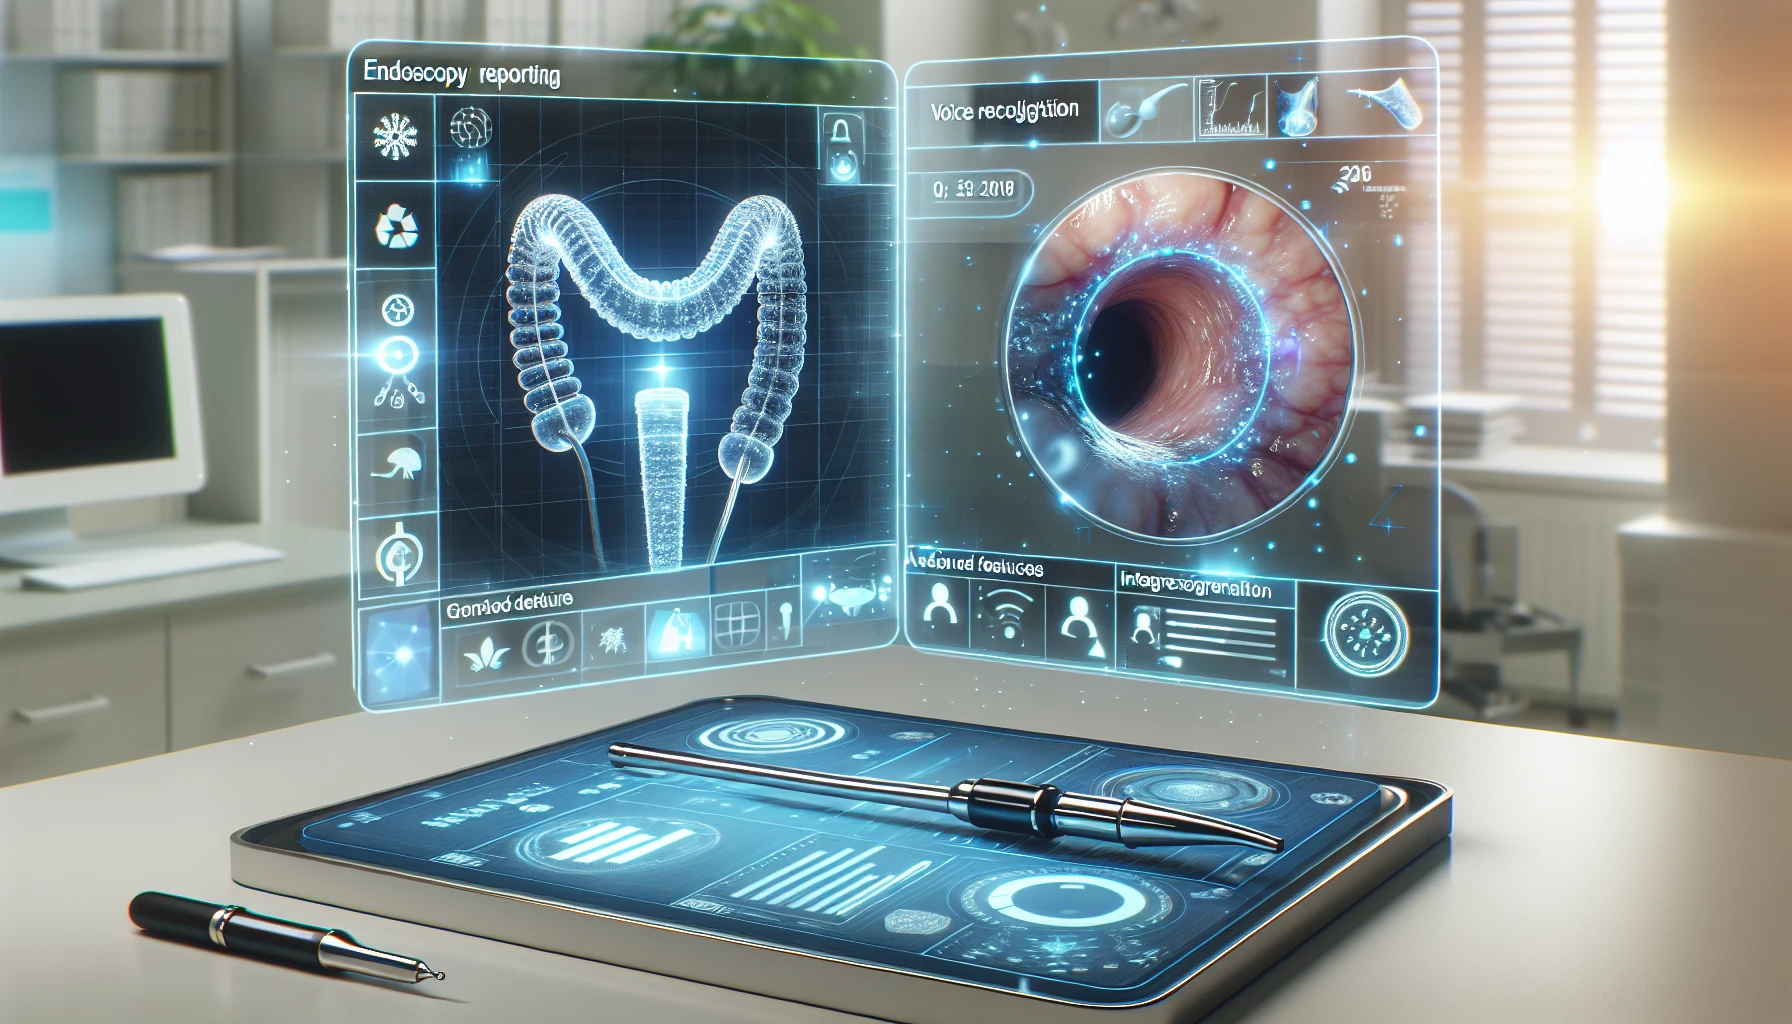 Illustration of a futuristic endoscopy reporting interface